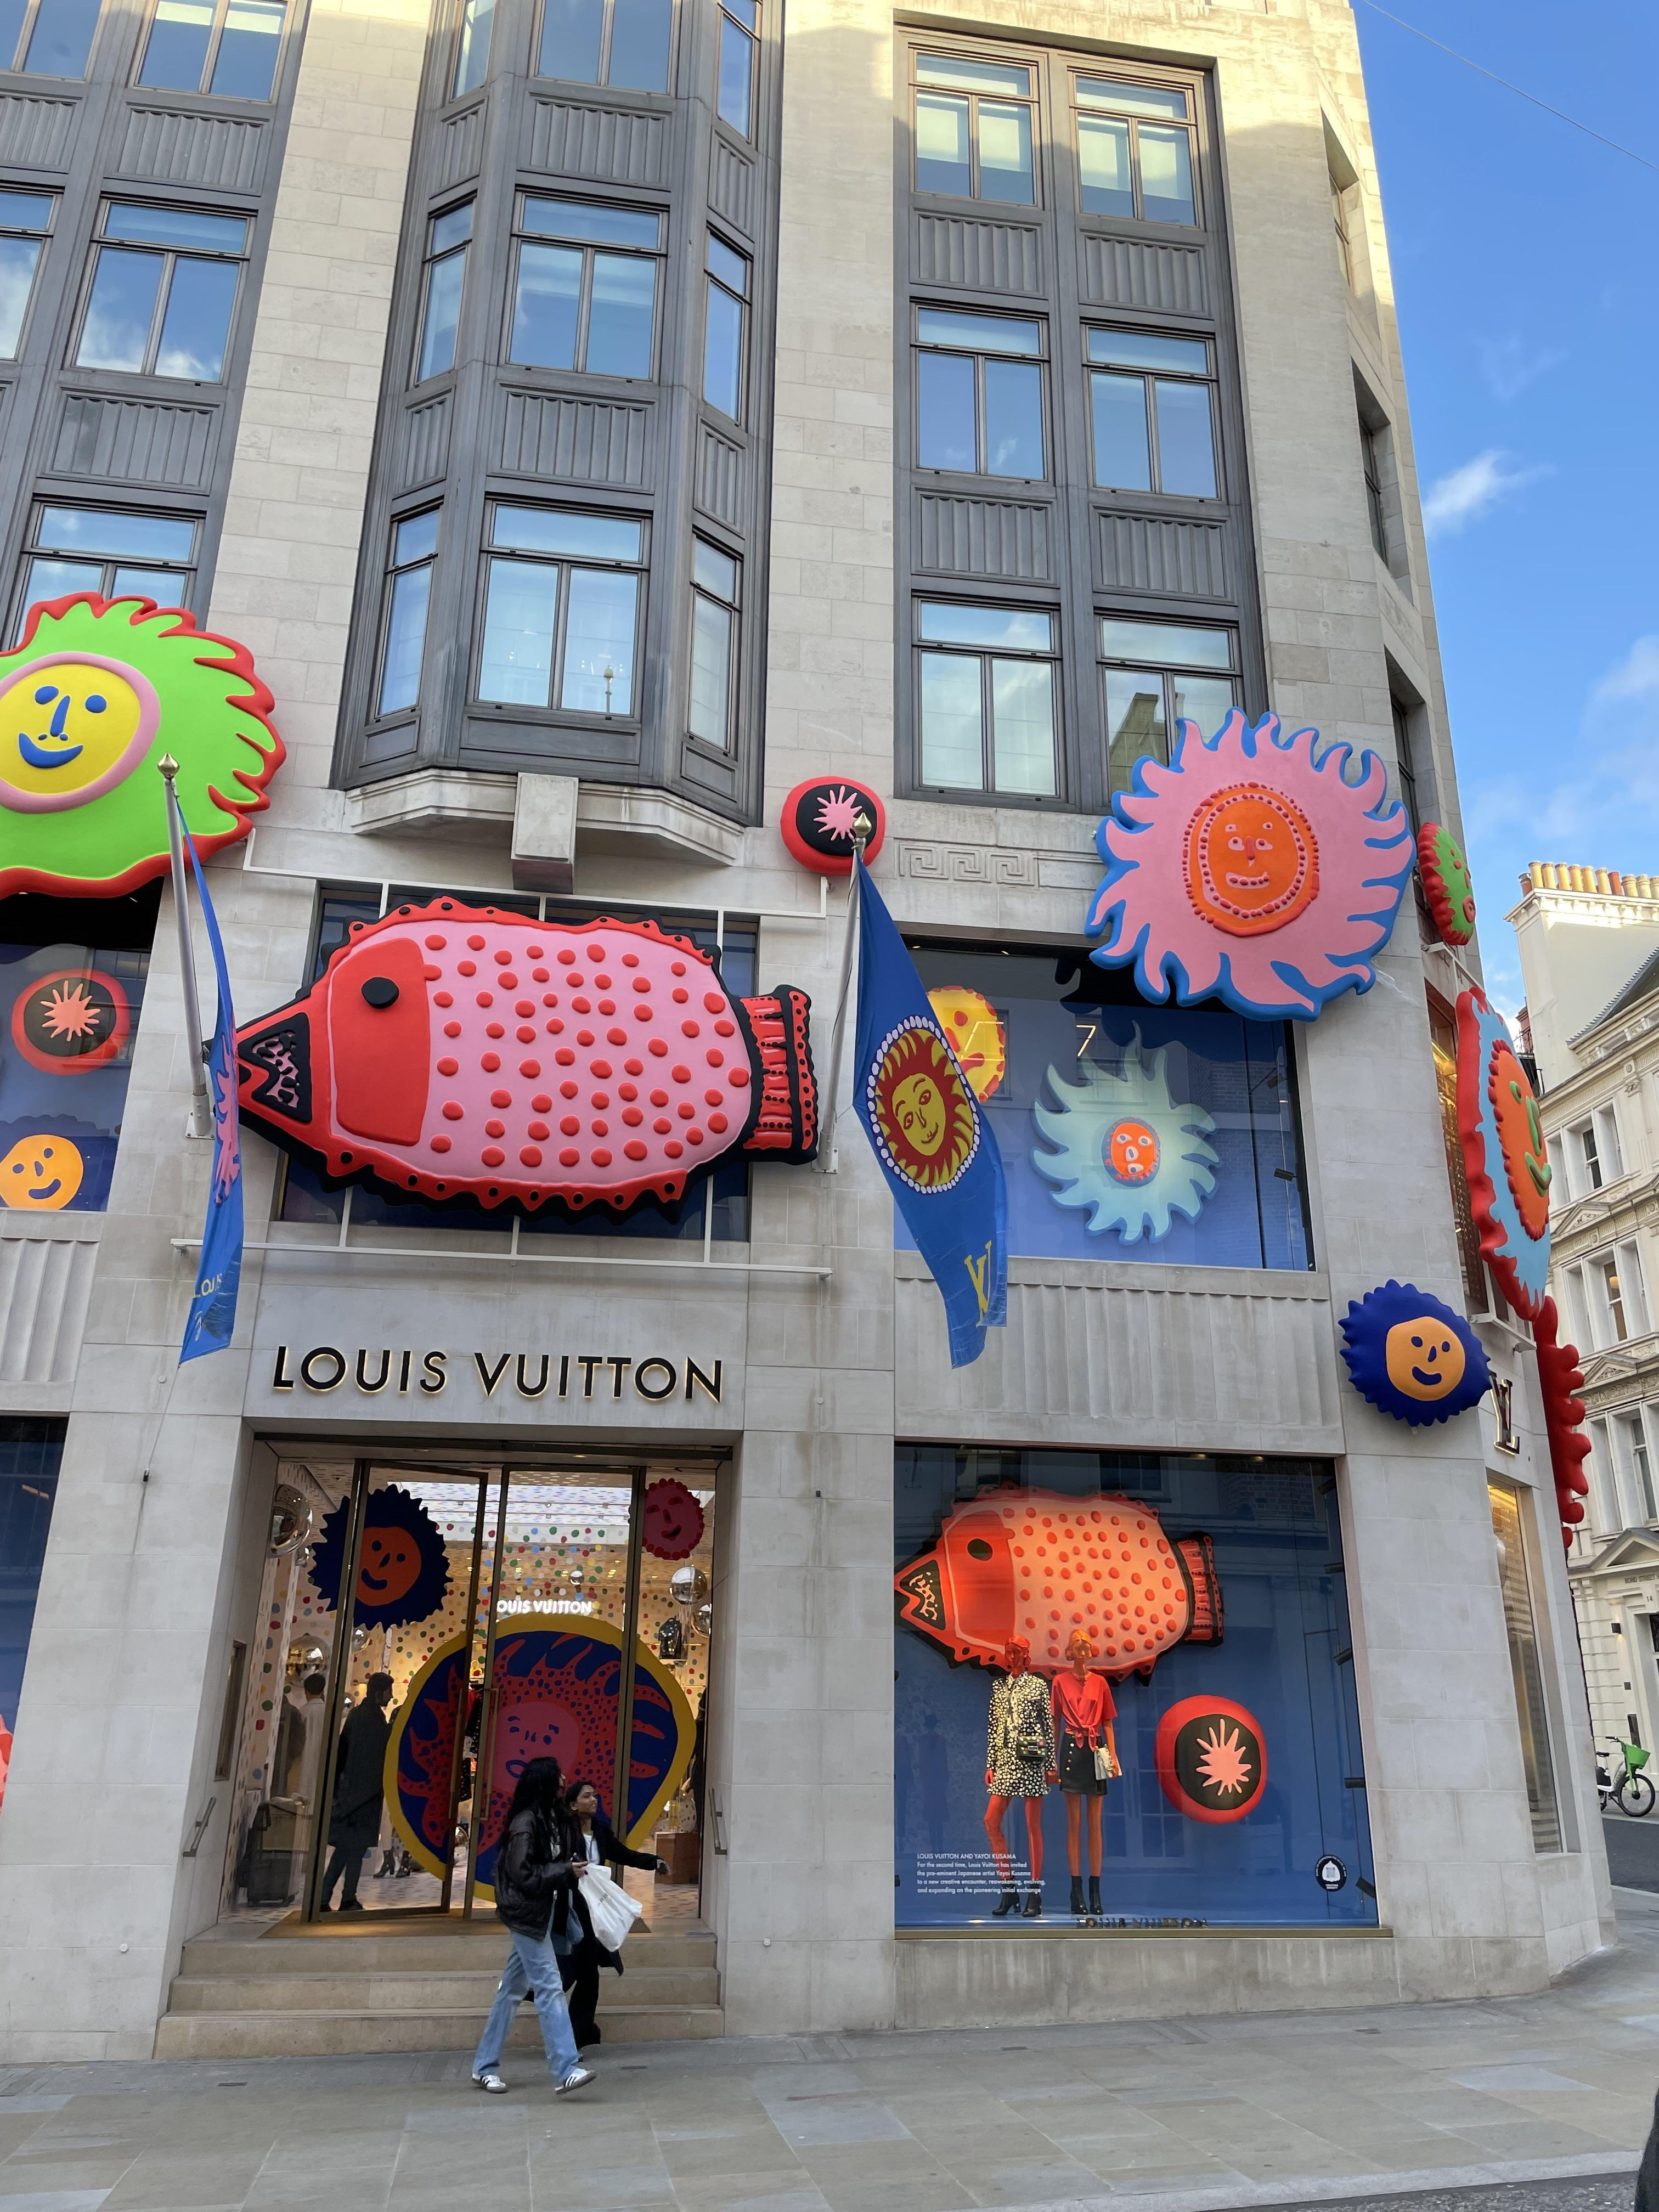 Louis Vuitton - Infinite possibilities. Showcasing the new Louis